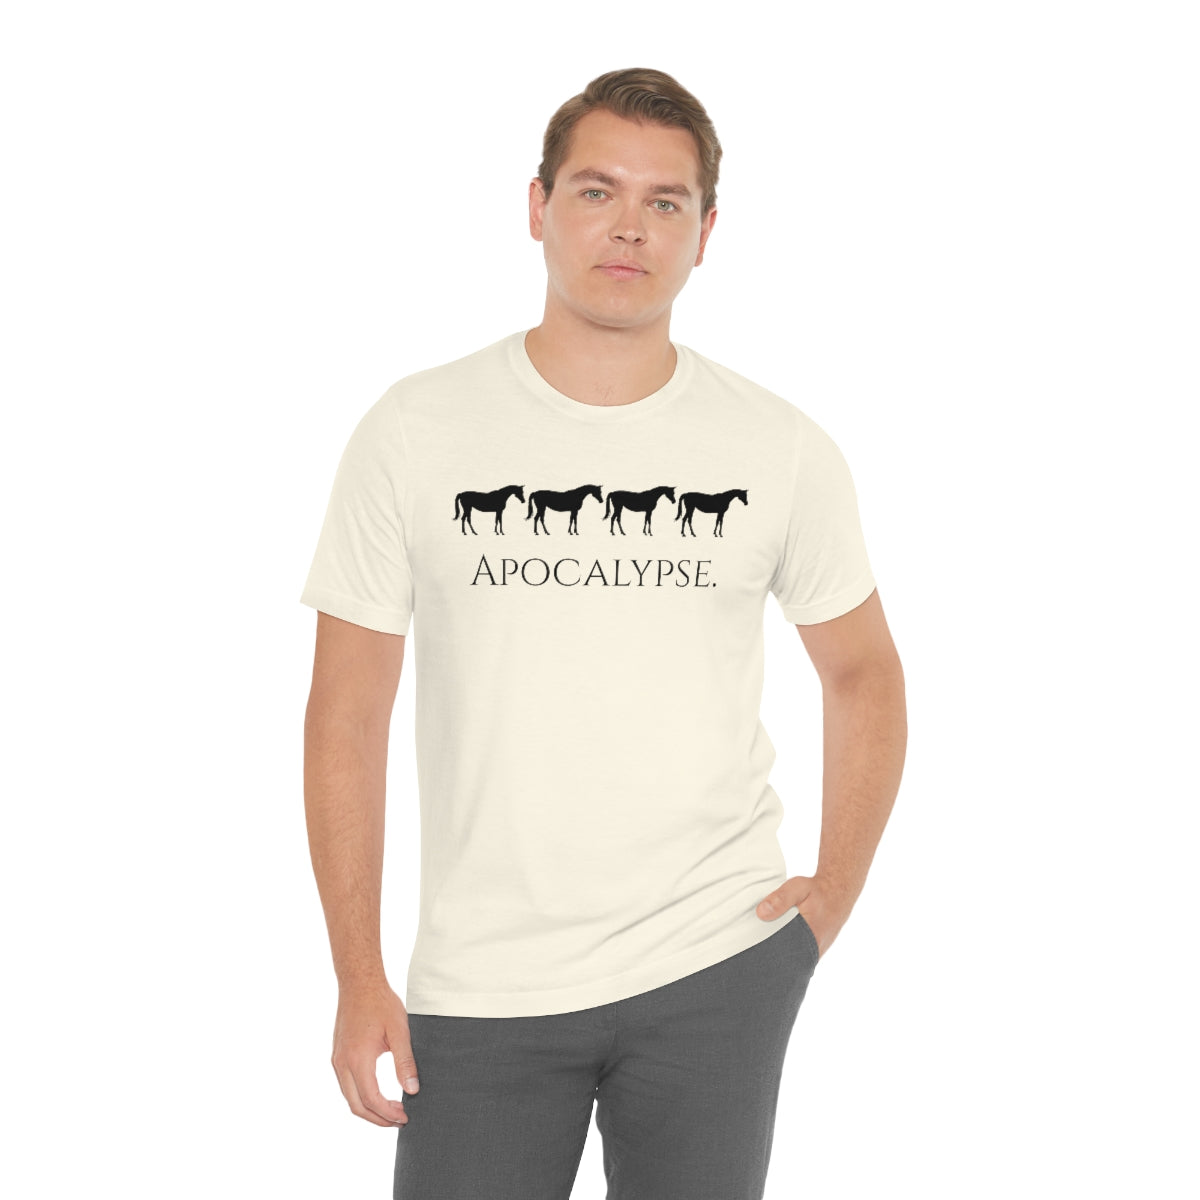 Five Horses (Horsemen) of the Apocalypse Funny T-shirt